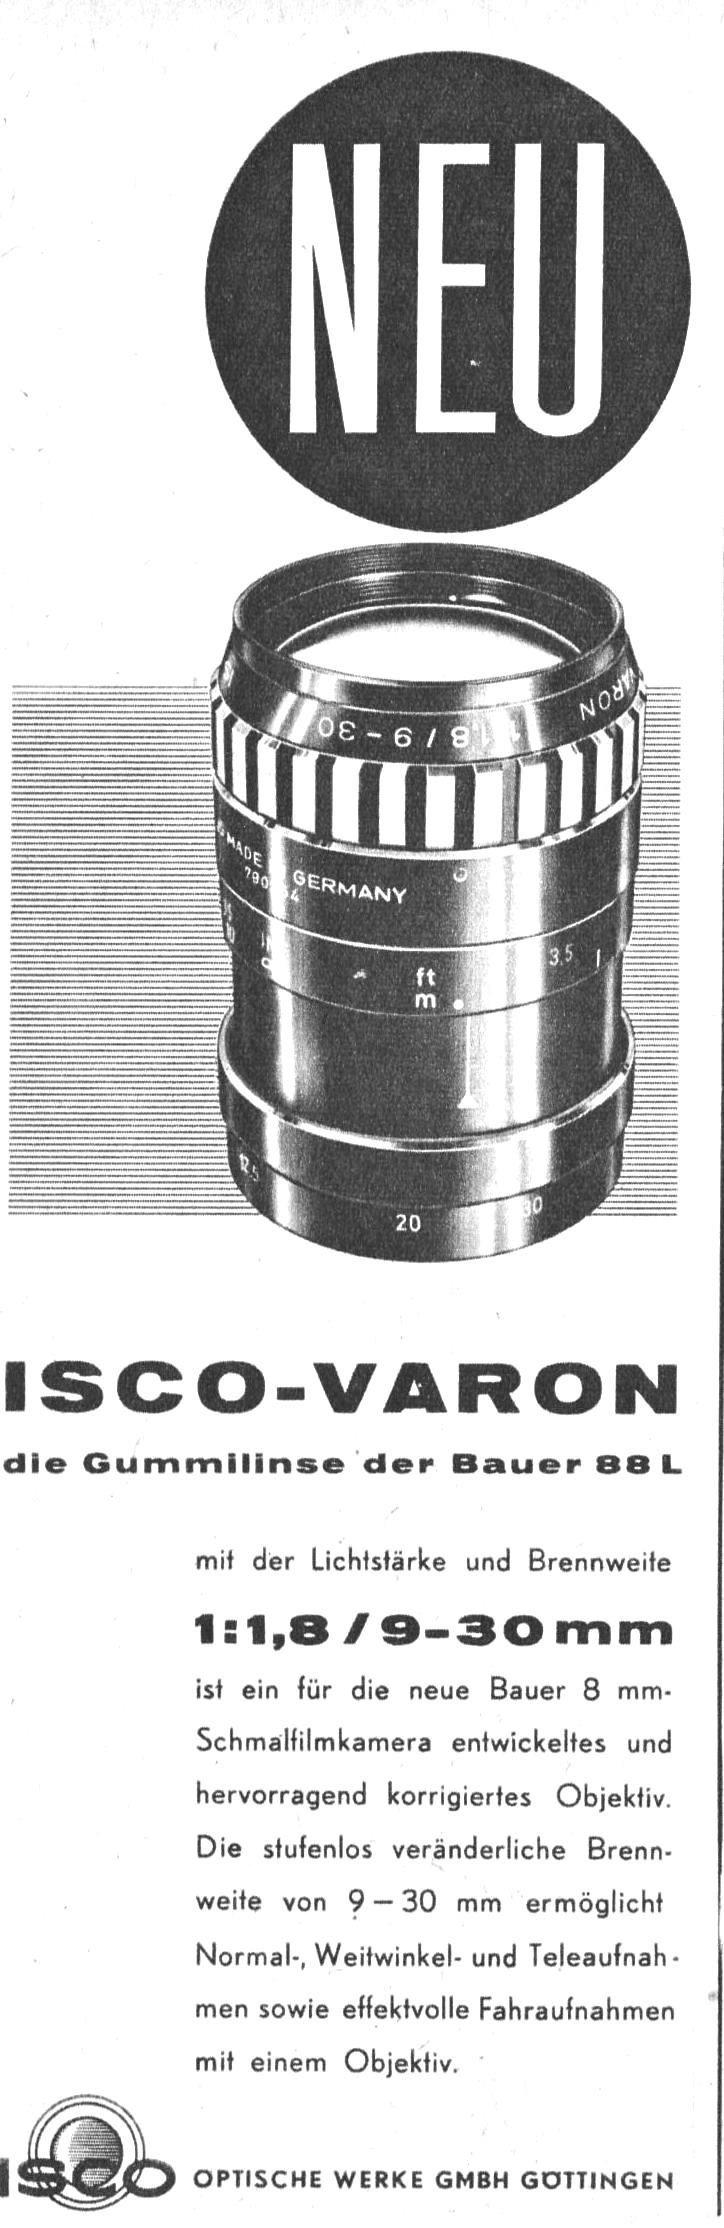 ISCO 1961 H1.jpg